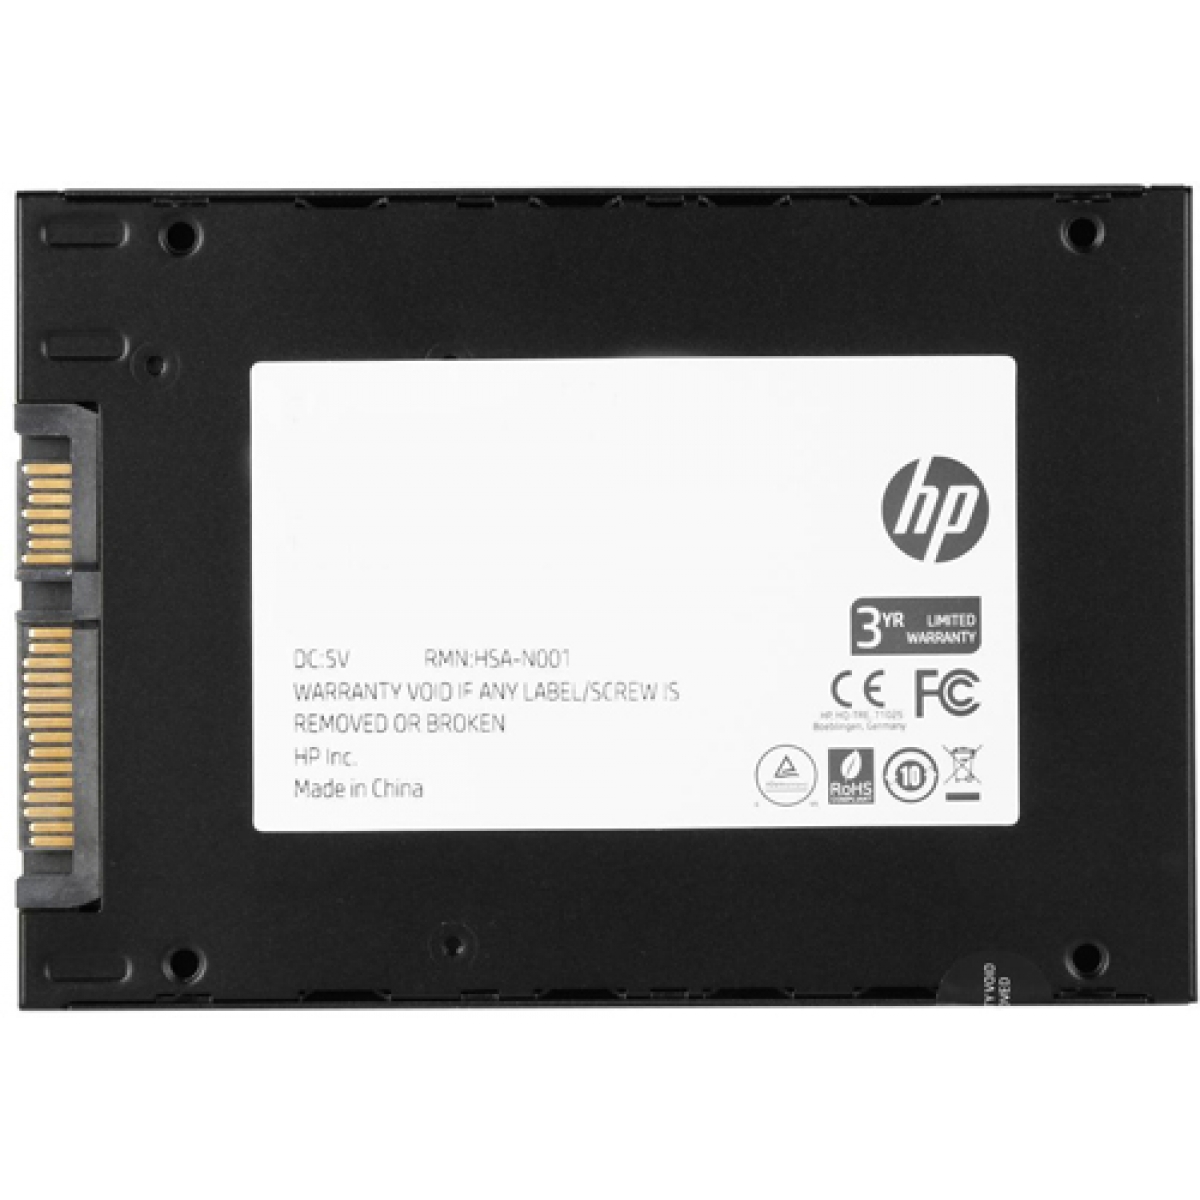 SSD HP S700 120GB, Sata III, Leitura 550MBs Gravação 480MBs, 2DP97AA#ABL